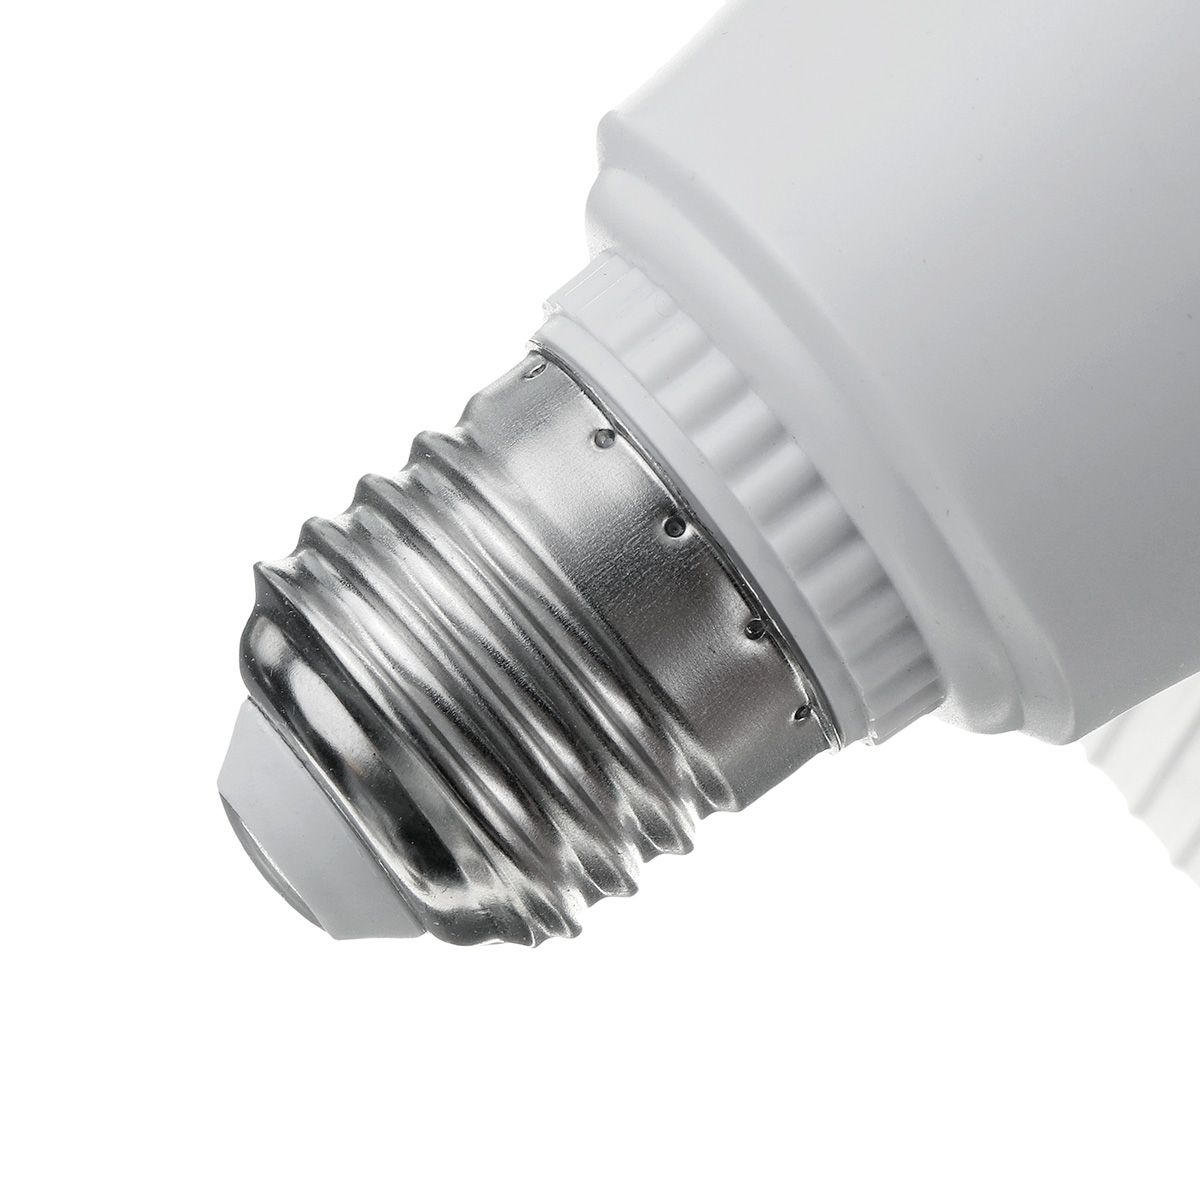 100W-E26E27-Foldable-235LED-Garage-Light-Bulb-Mining-Workshop-Supermarket-Ceiling-Lamp-85-265V-1618202